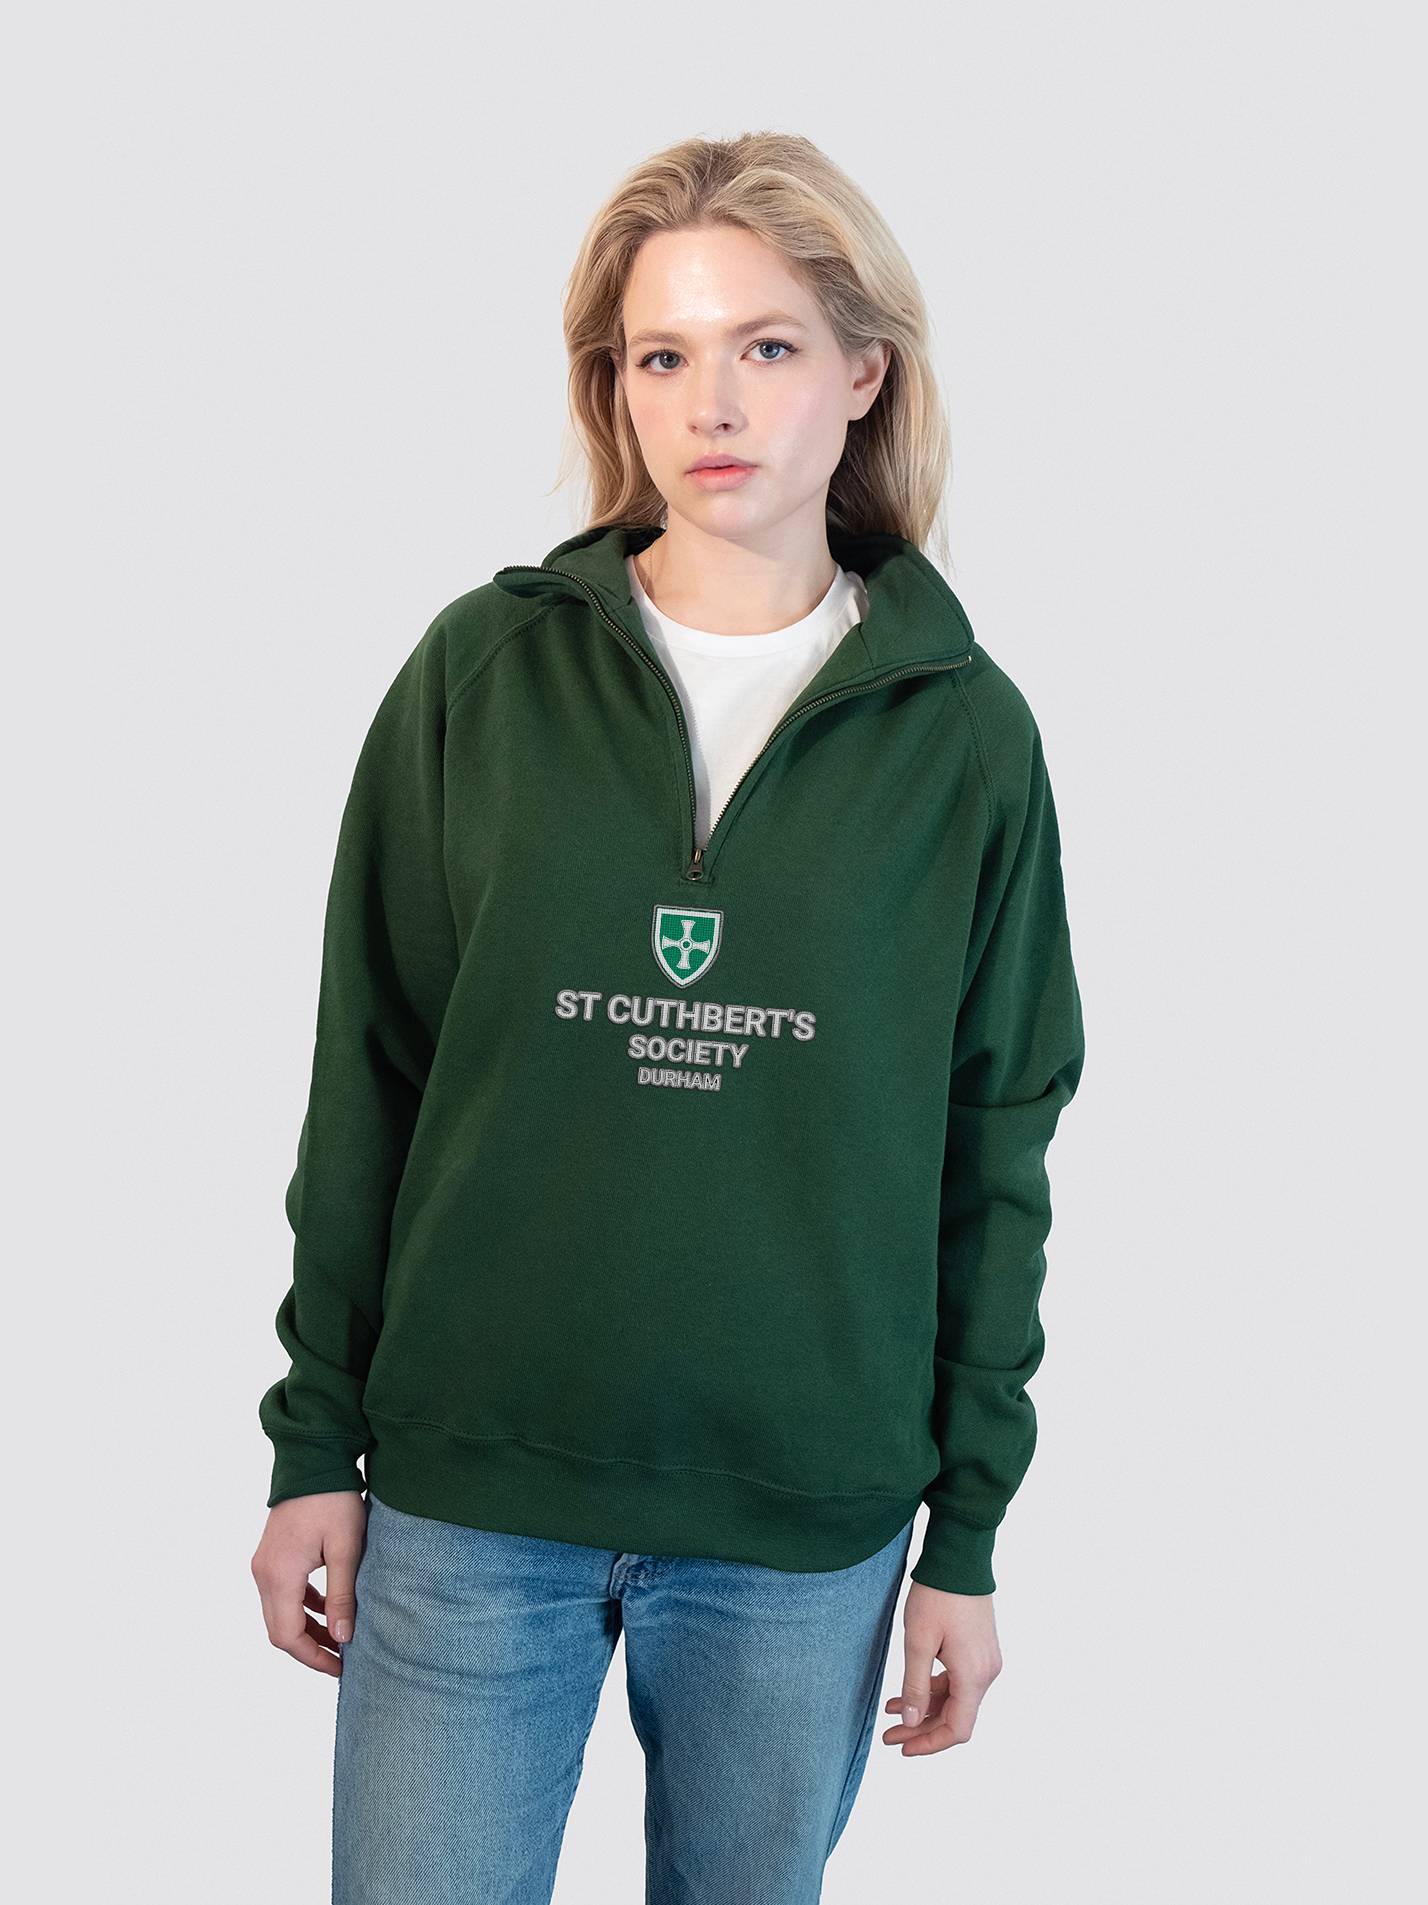 St Cuthbert's Society Durham Heritage Unisex 1/4 Zip Sweatshirt